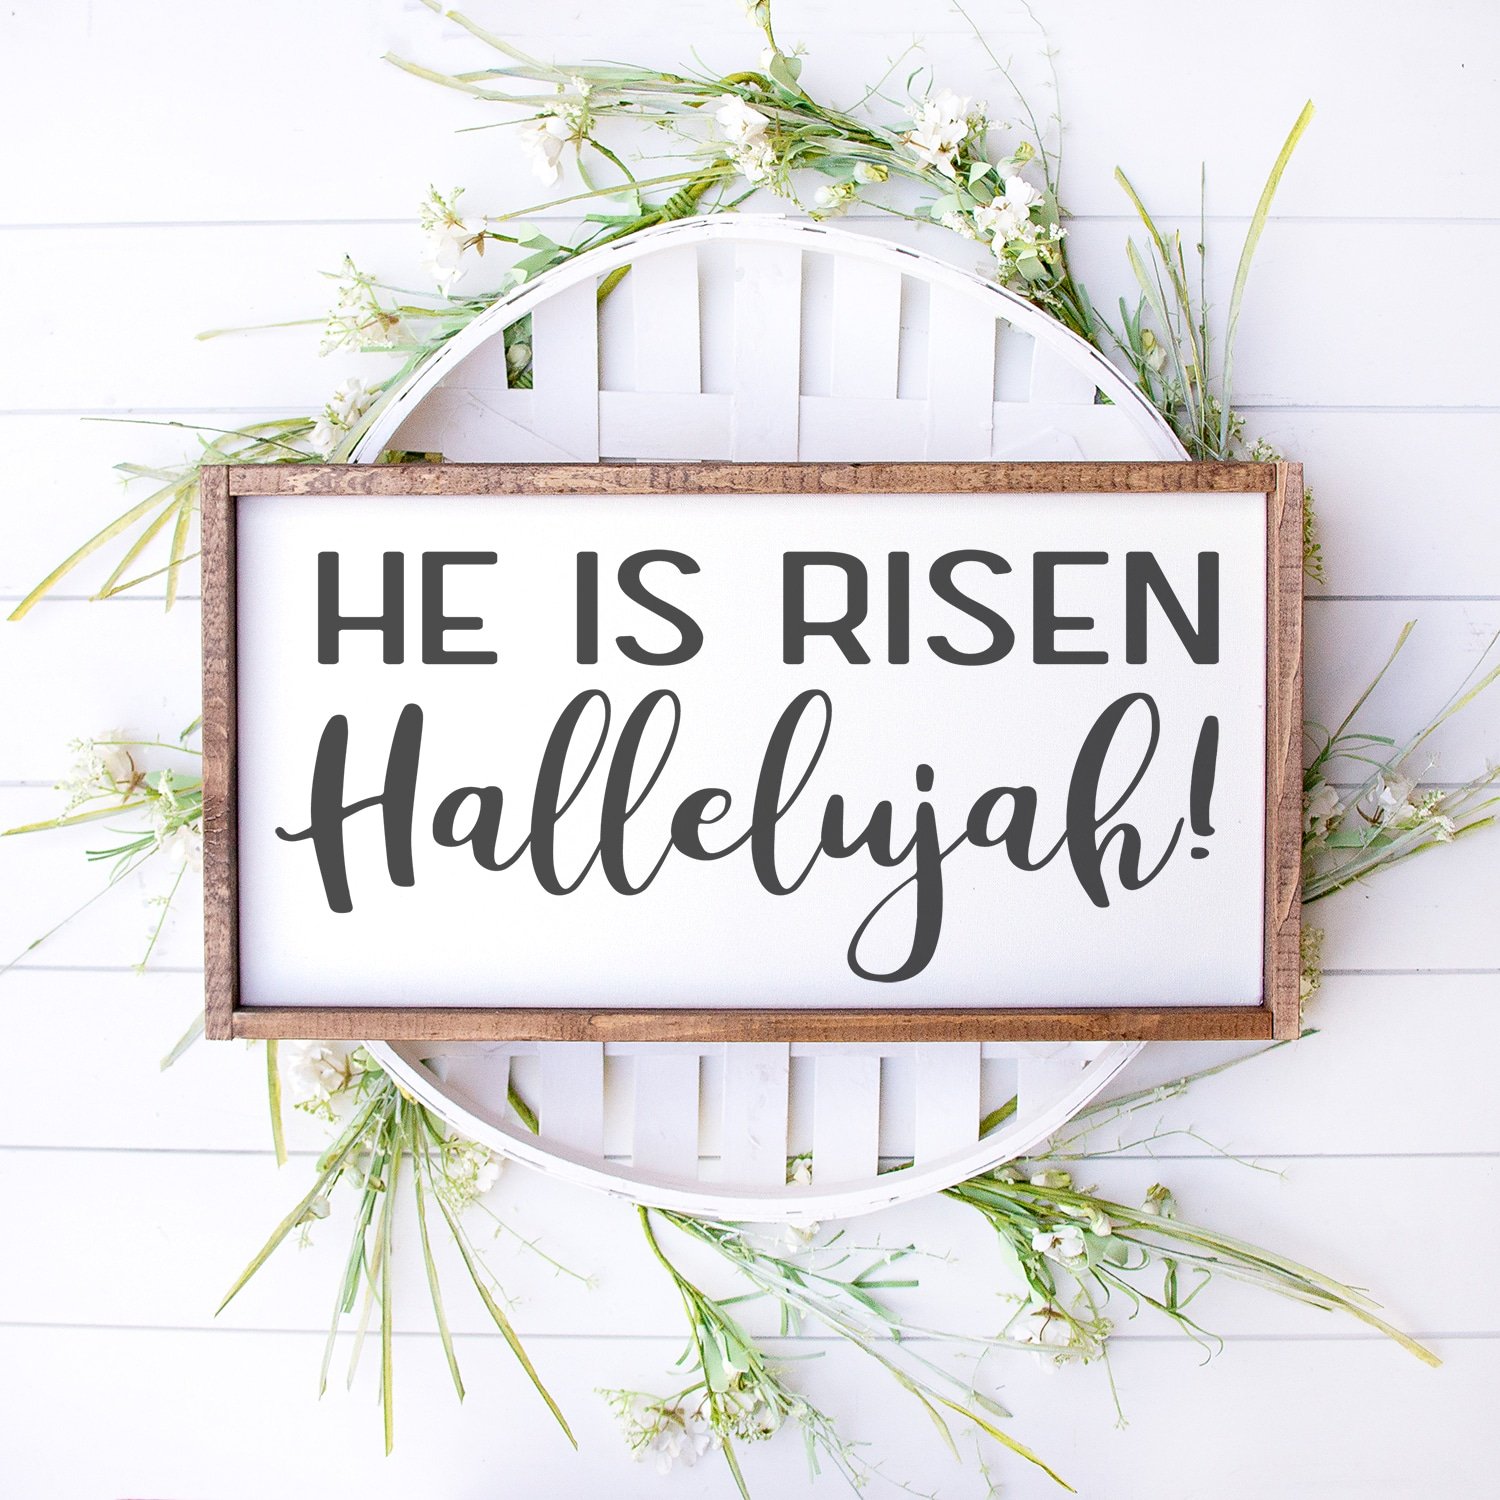 he is risen hallelujah! svg file on sign